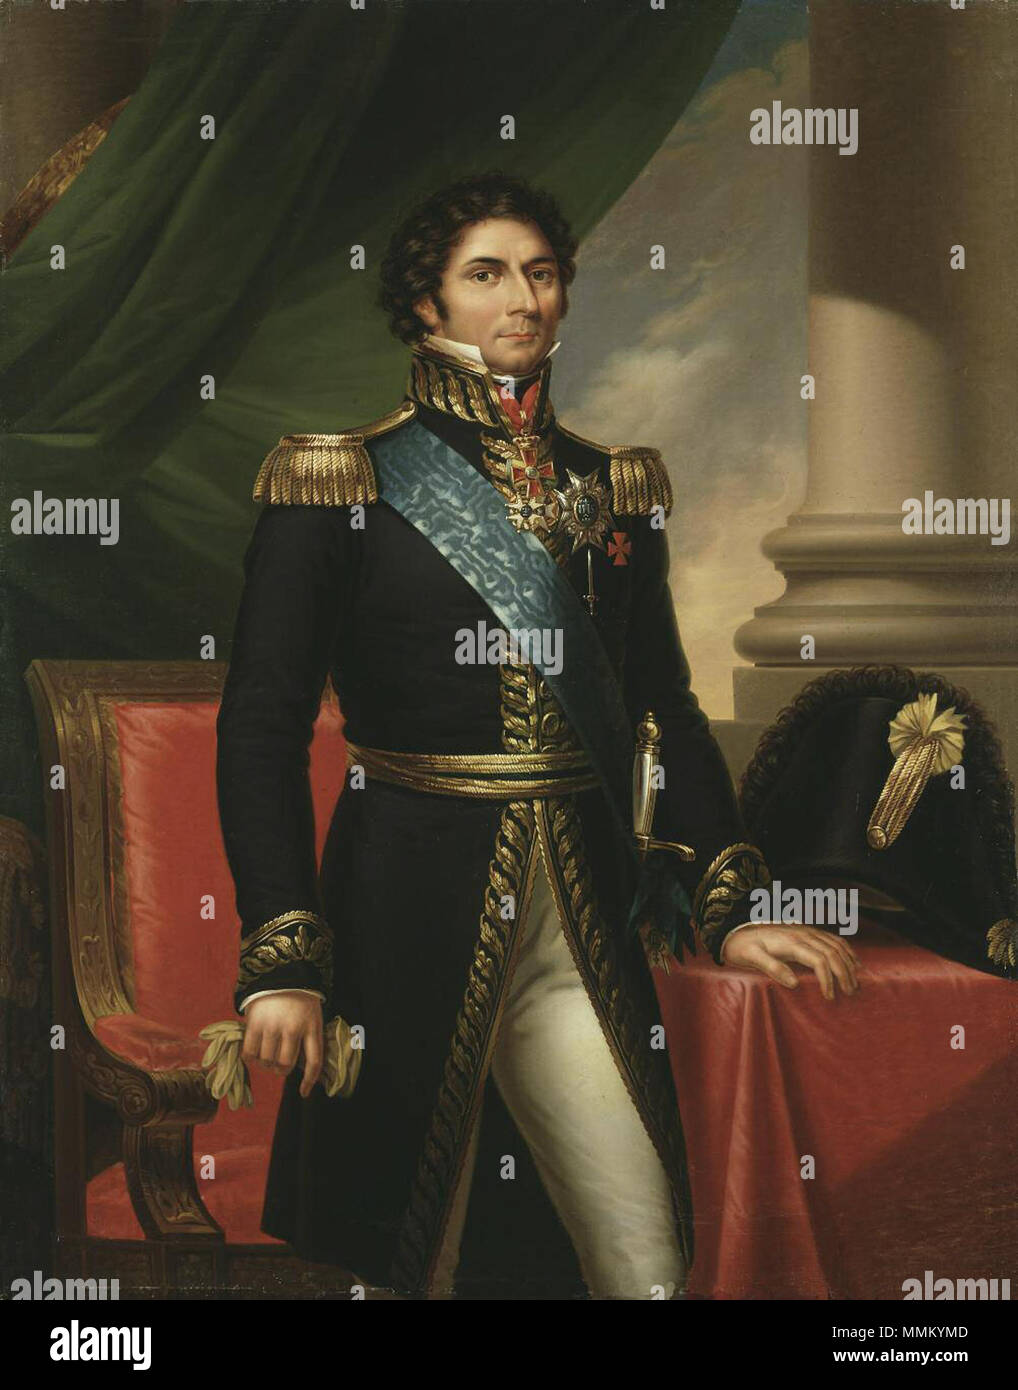 Layout 1 Charles XIV John Bernadotte, King of Sweden and Norway. 19th century. Bernadotte Stock Photo